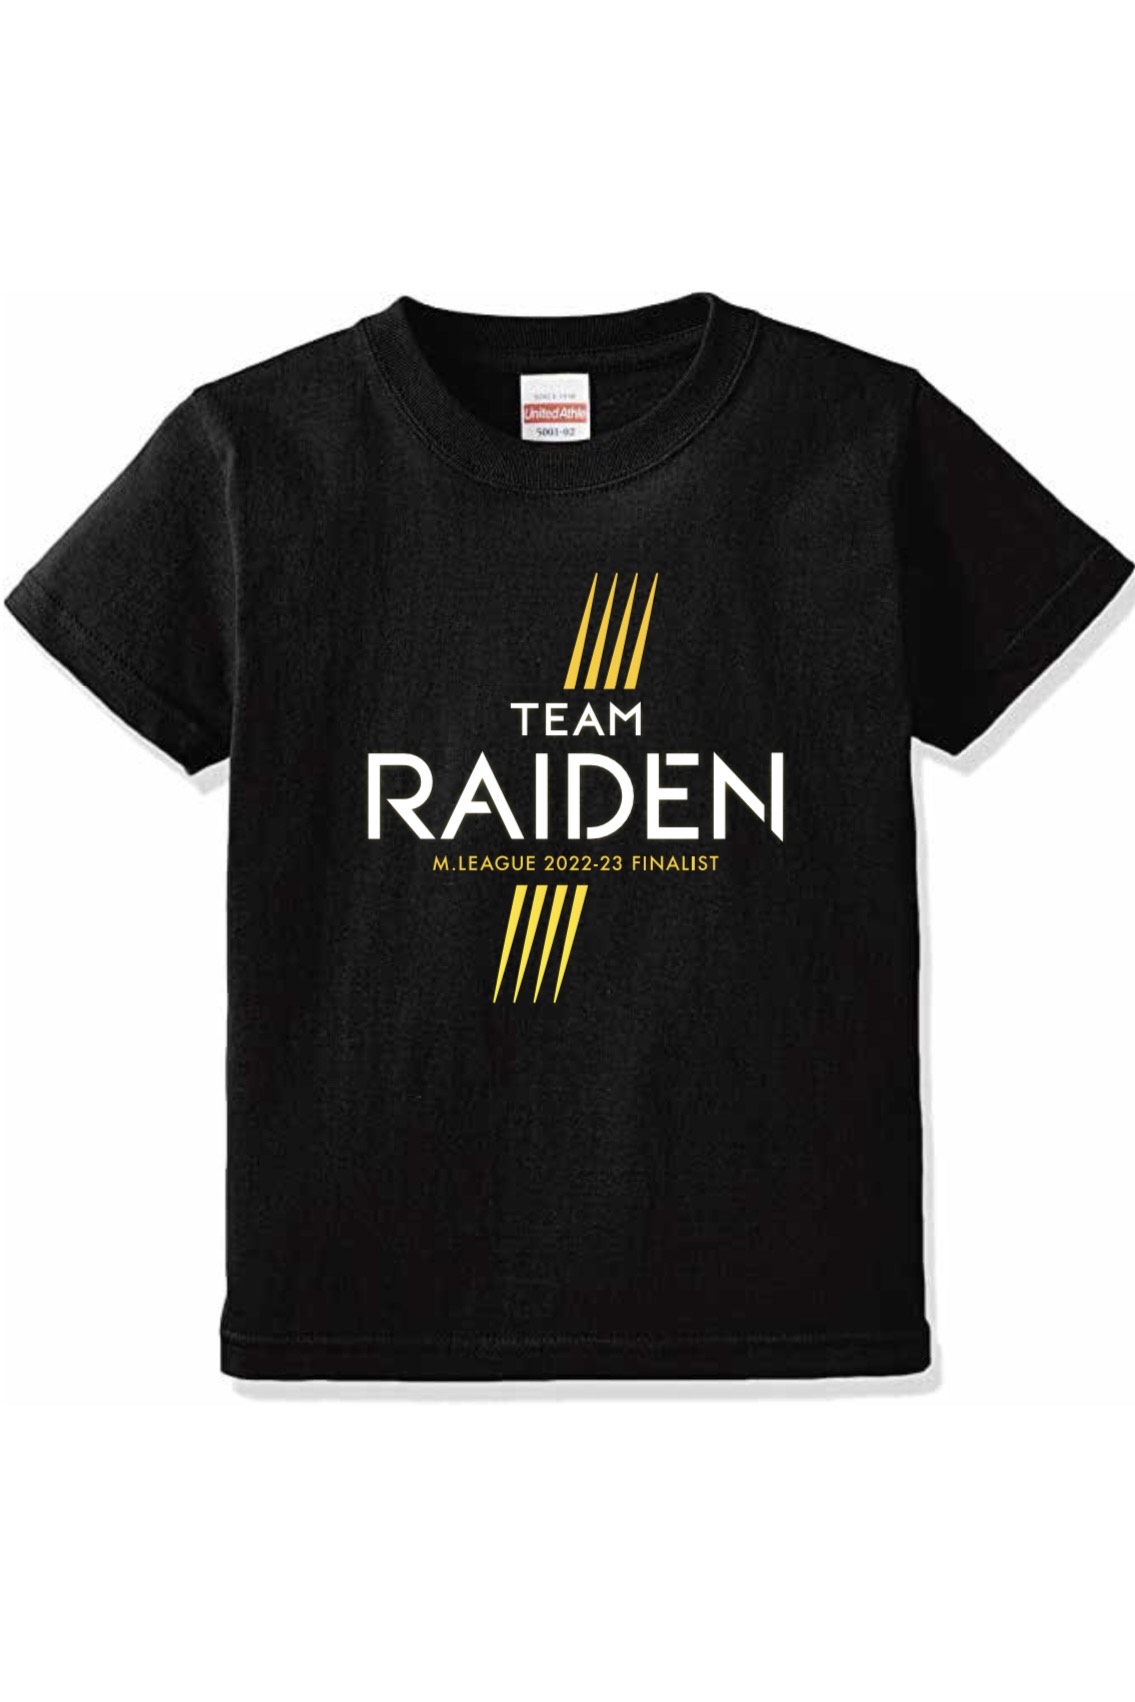 TEAM雷電 ファイナル進出記念Tシャツ(Type-RAIDEN)